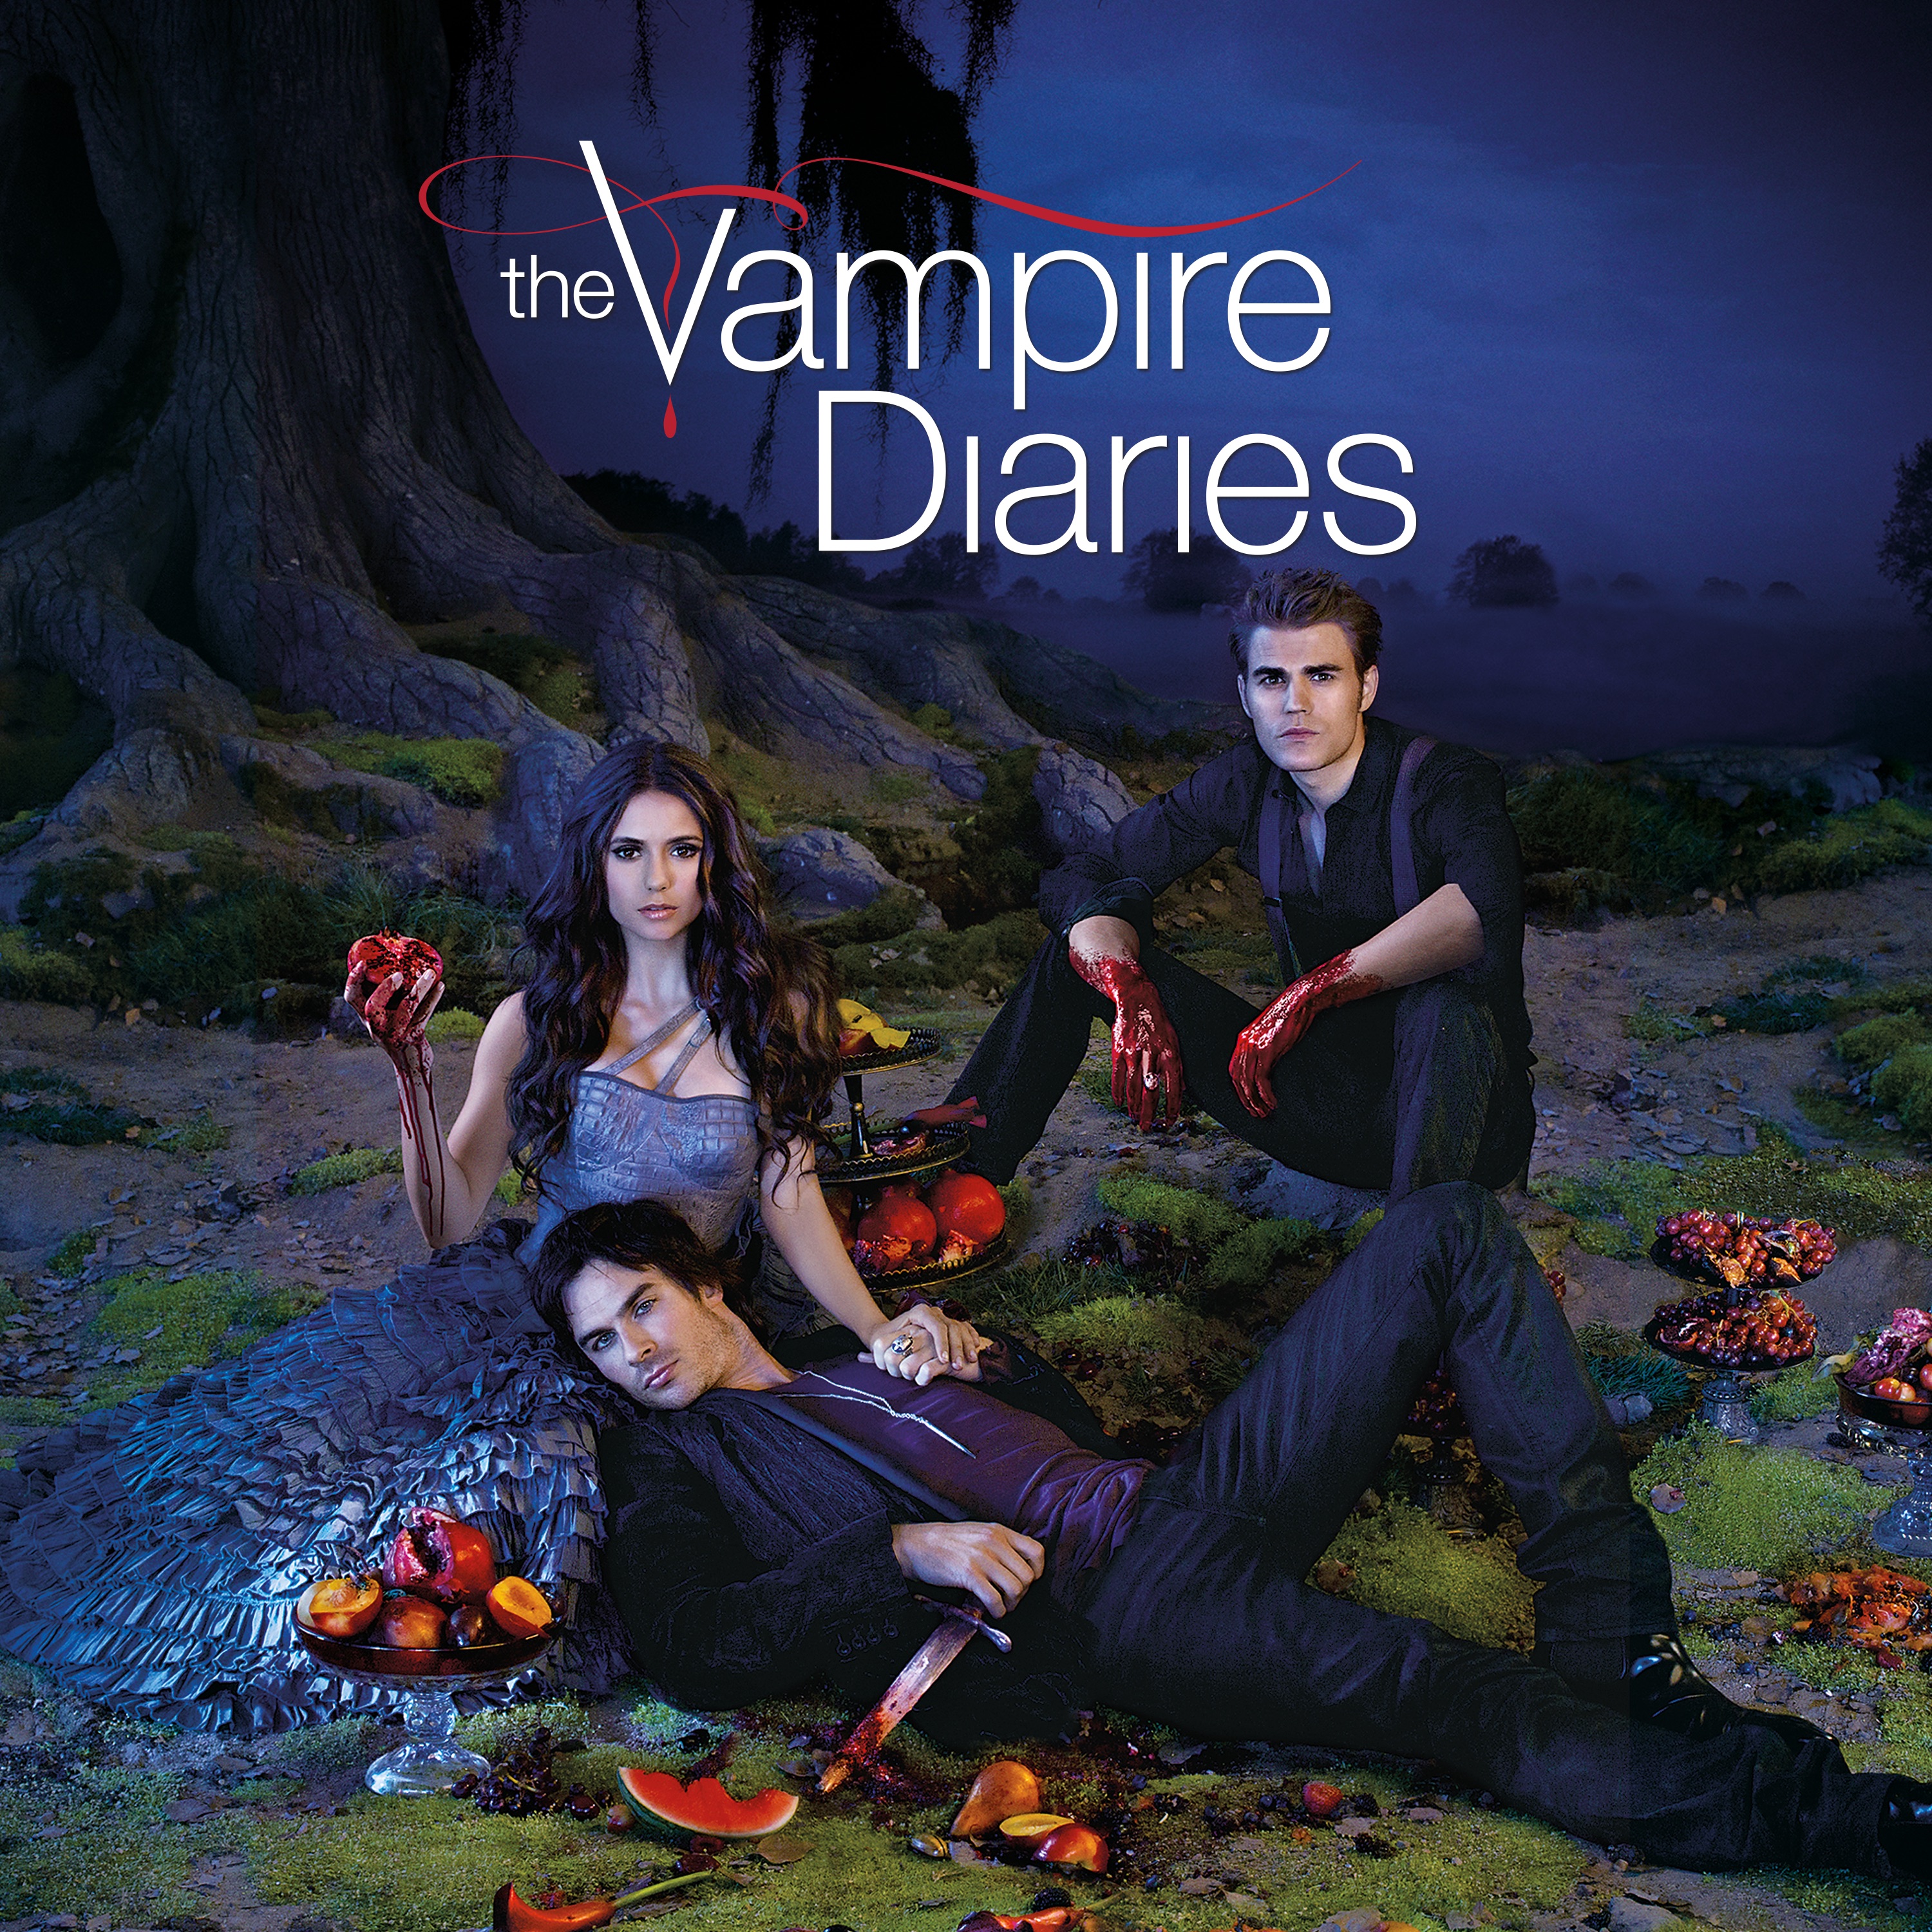 vampire diaries season 3 complete download